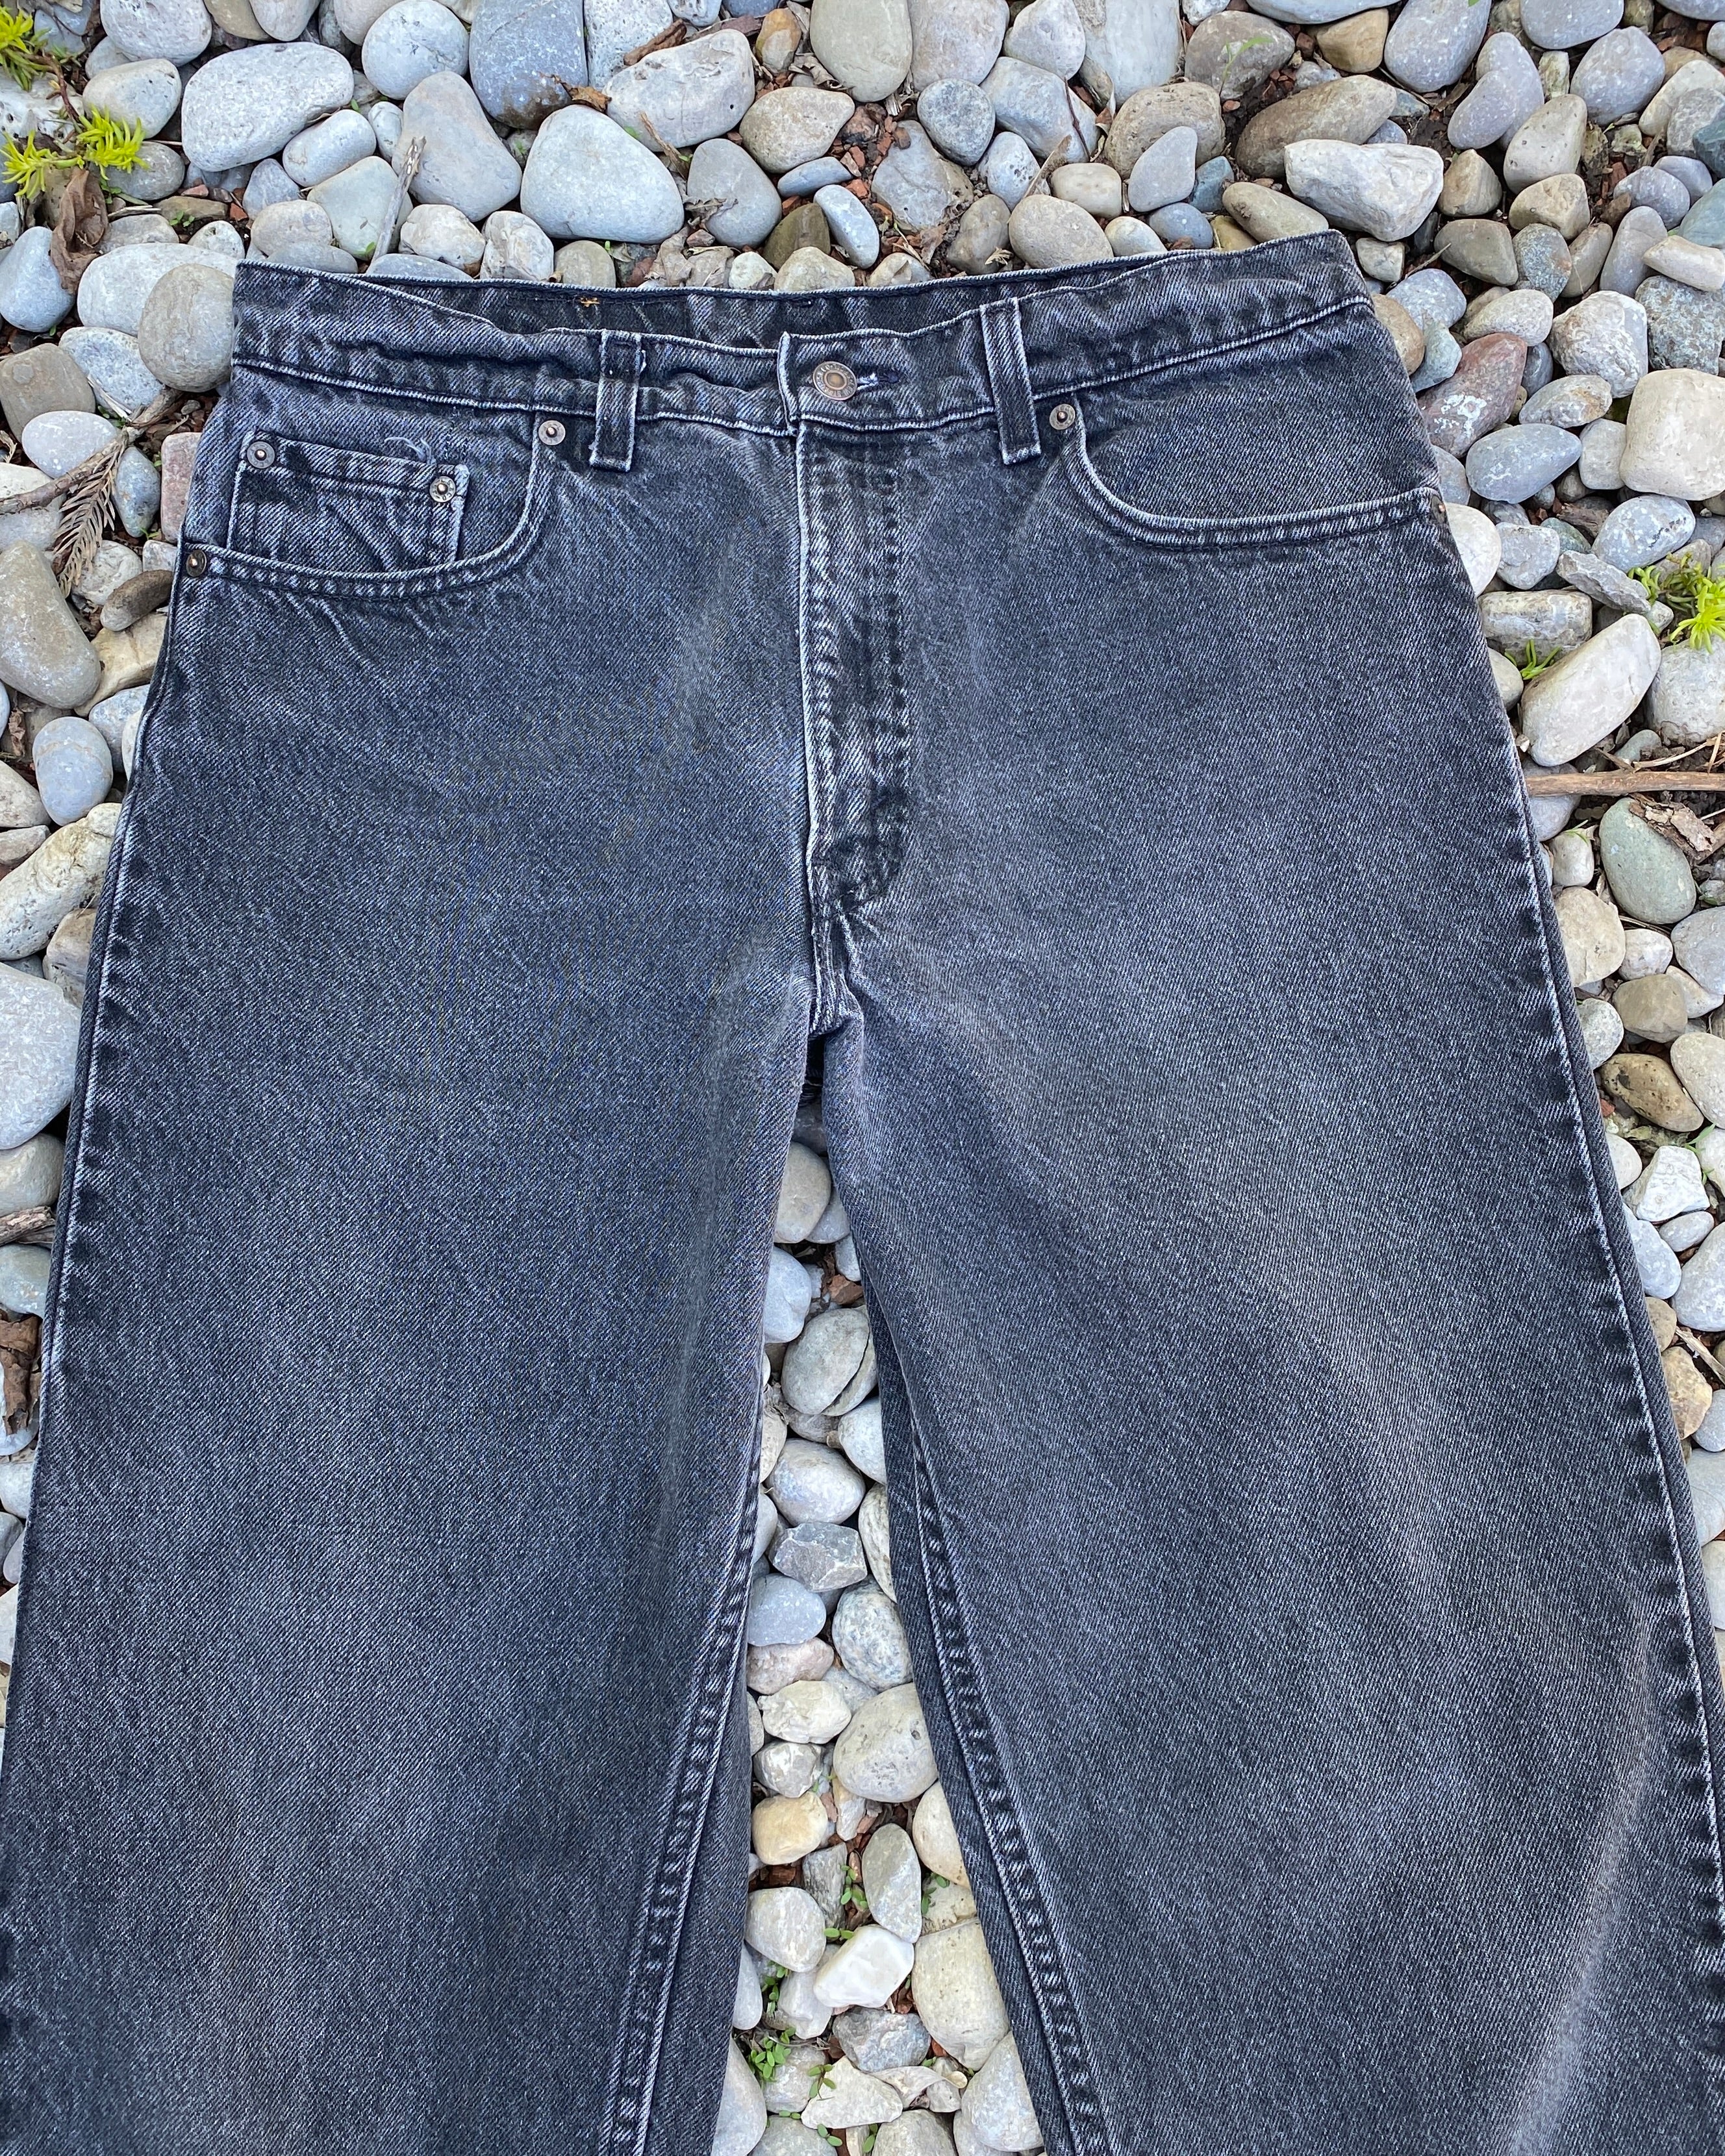 Vintage Levis 550 Black Wash Jeans size 32 Made in USA